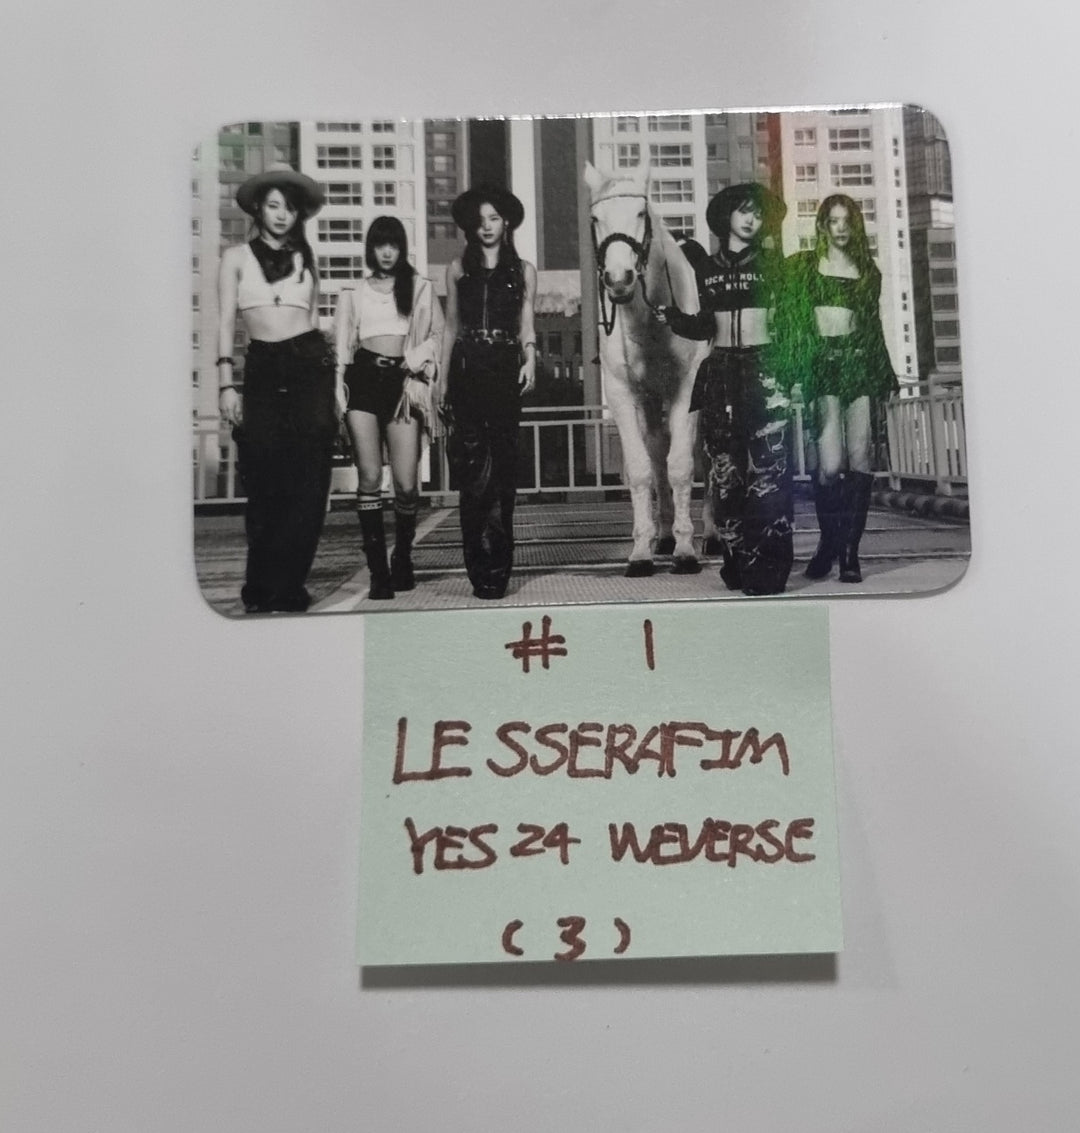 LE SSERAFIM "UNFORGIVEN" - Yes24 プレオーダー特典ホログラムフォトカード [Weverse Album Ver.]